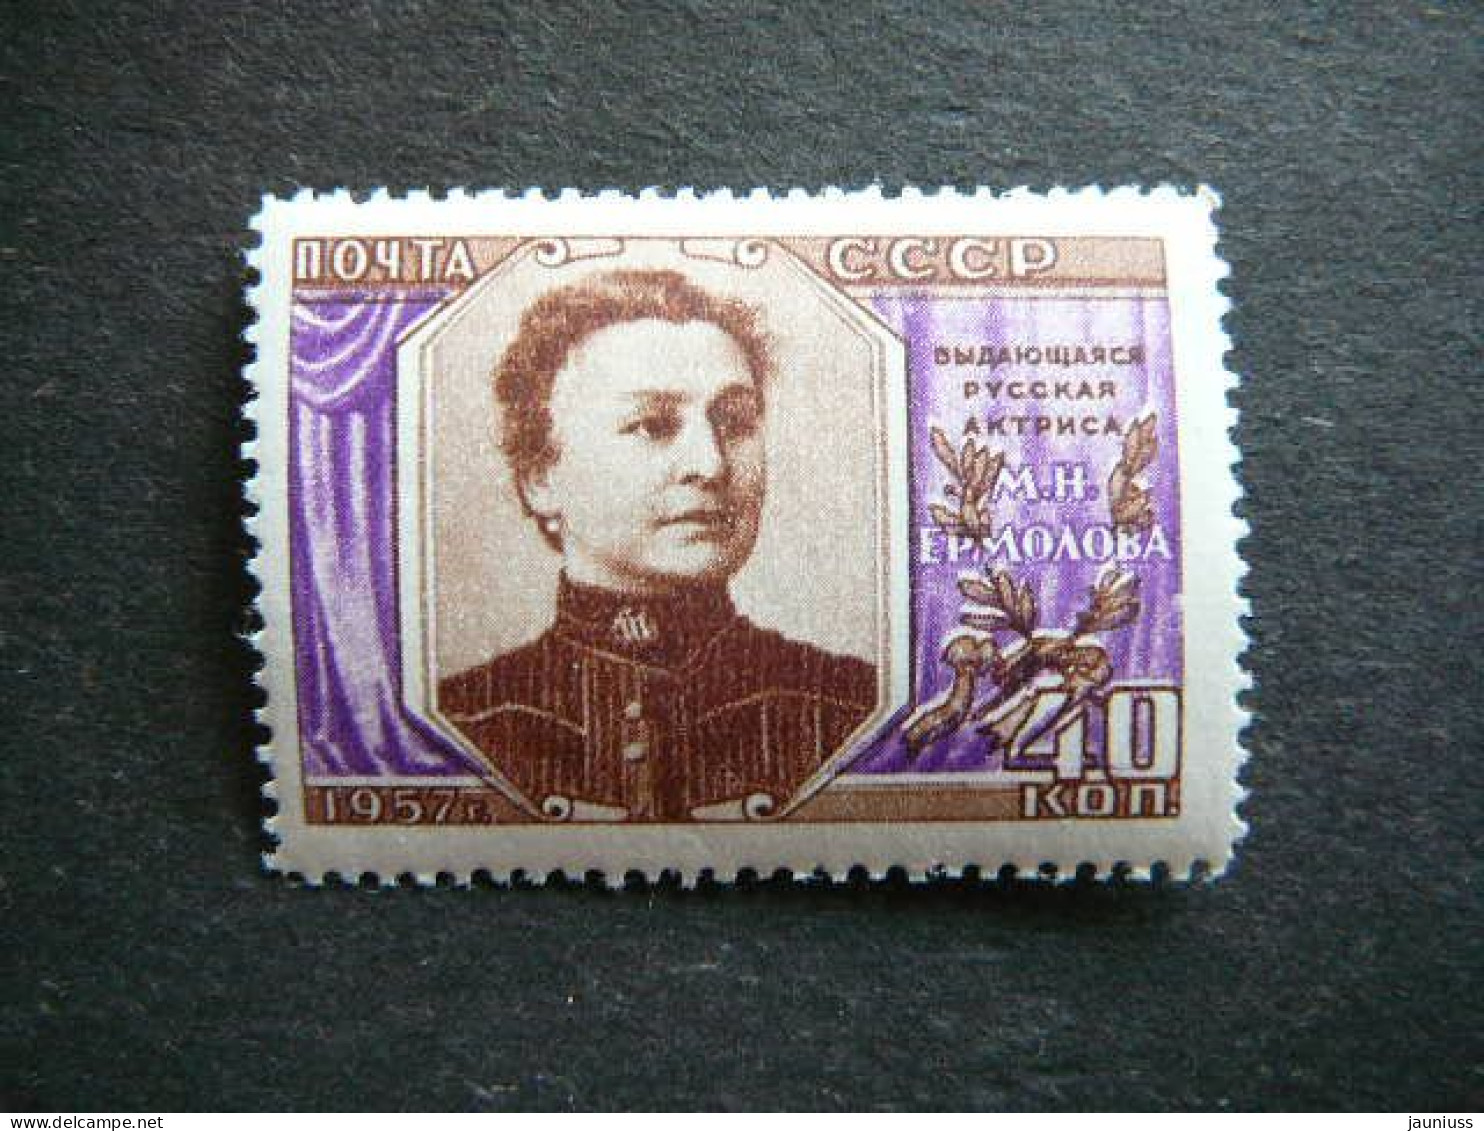 M.N.Ermolova # Russia USSR Sowjetunion # 1957 MNH # Mi.2038 - Unused Stamps